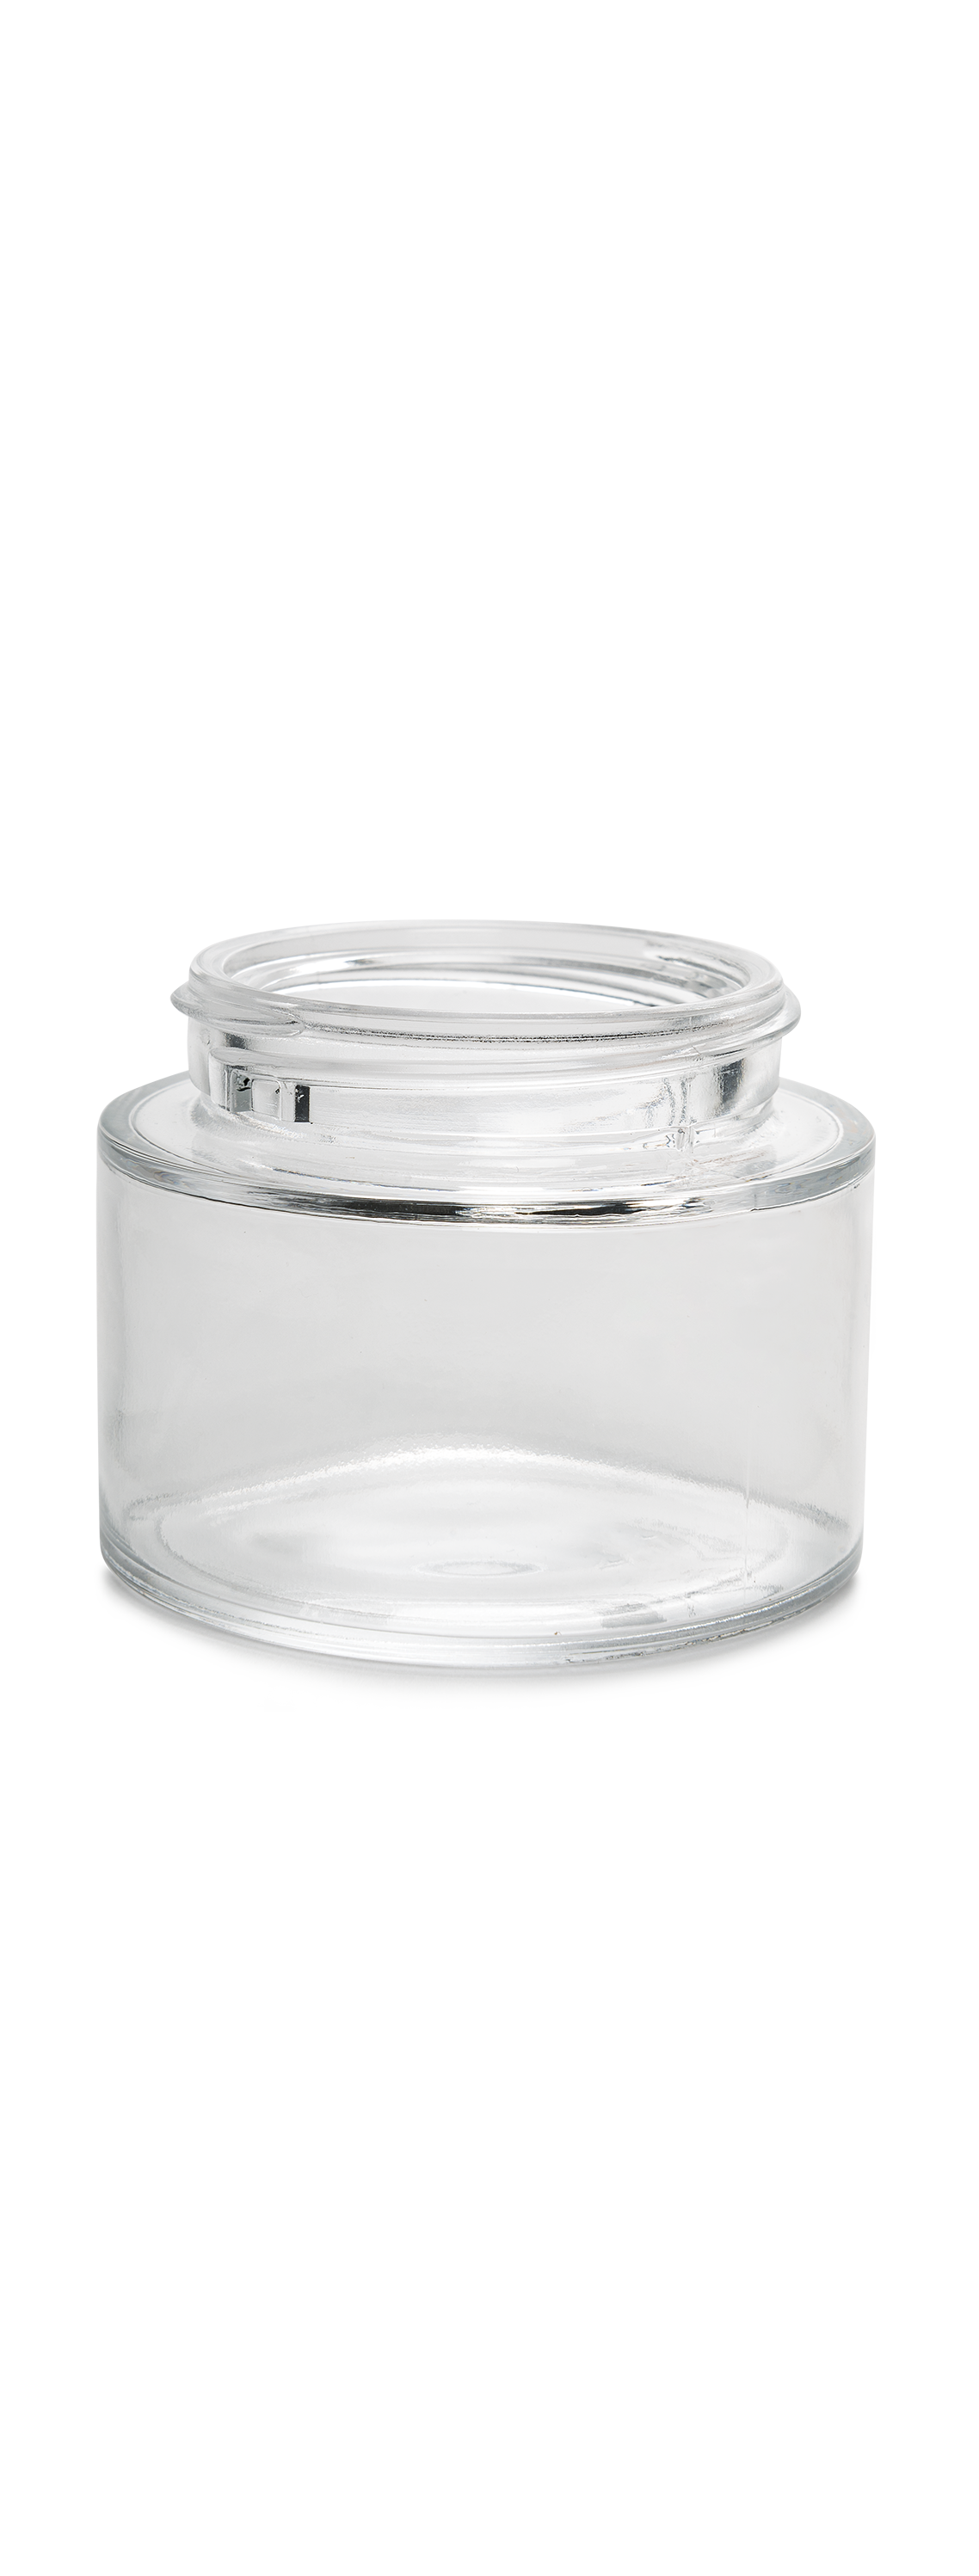 contenant en verre pot epure allege 50 ml verre transparent